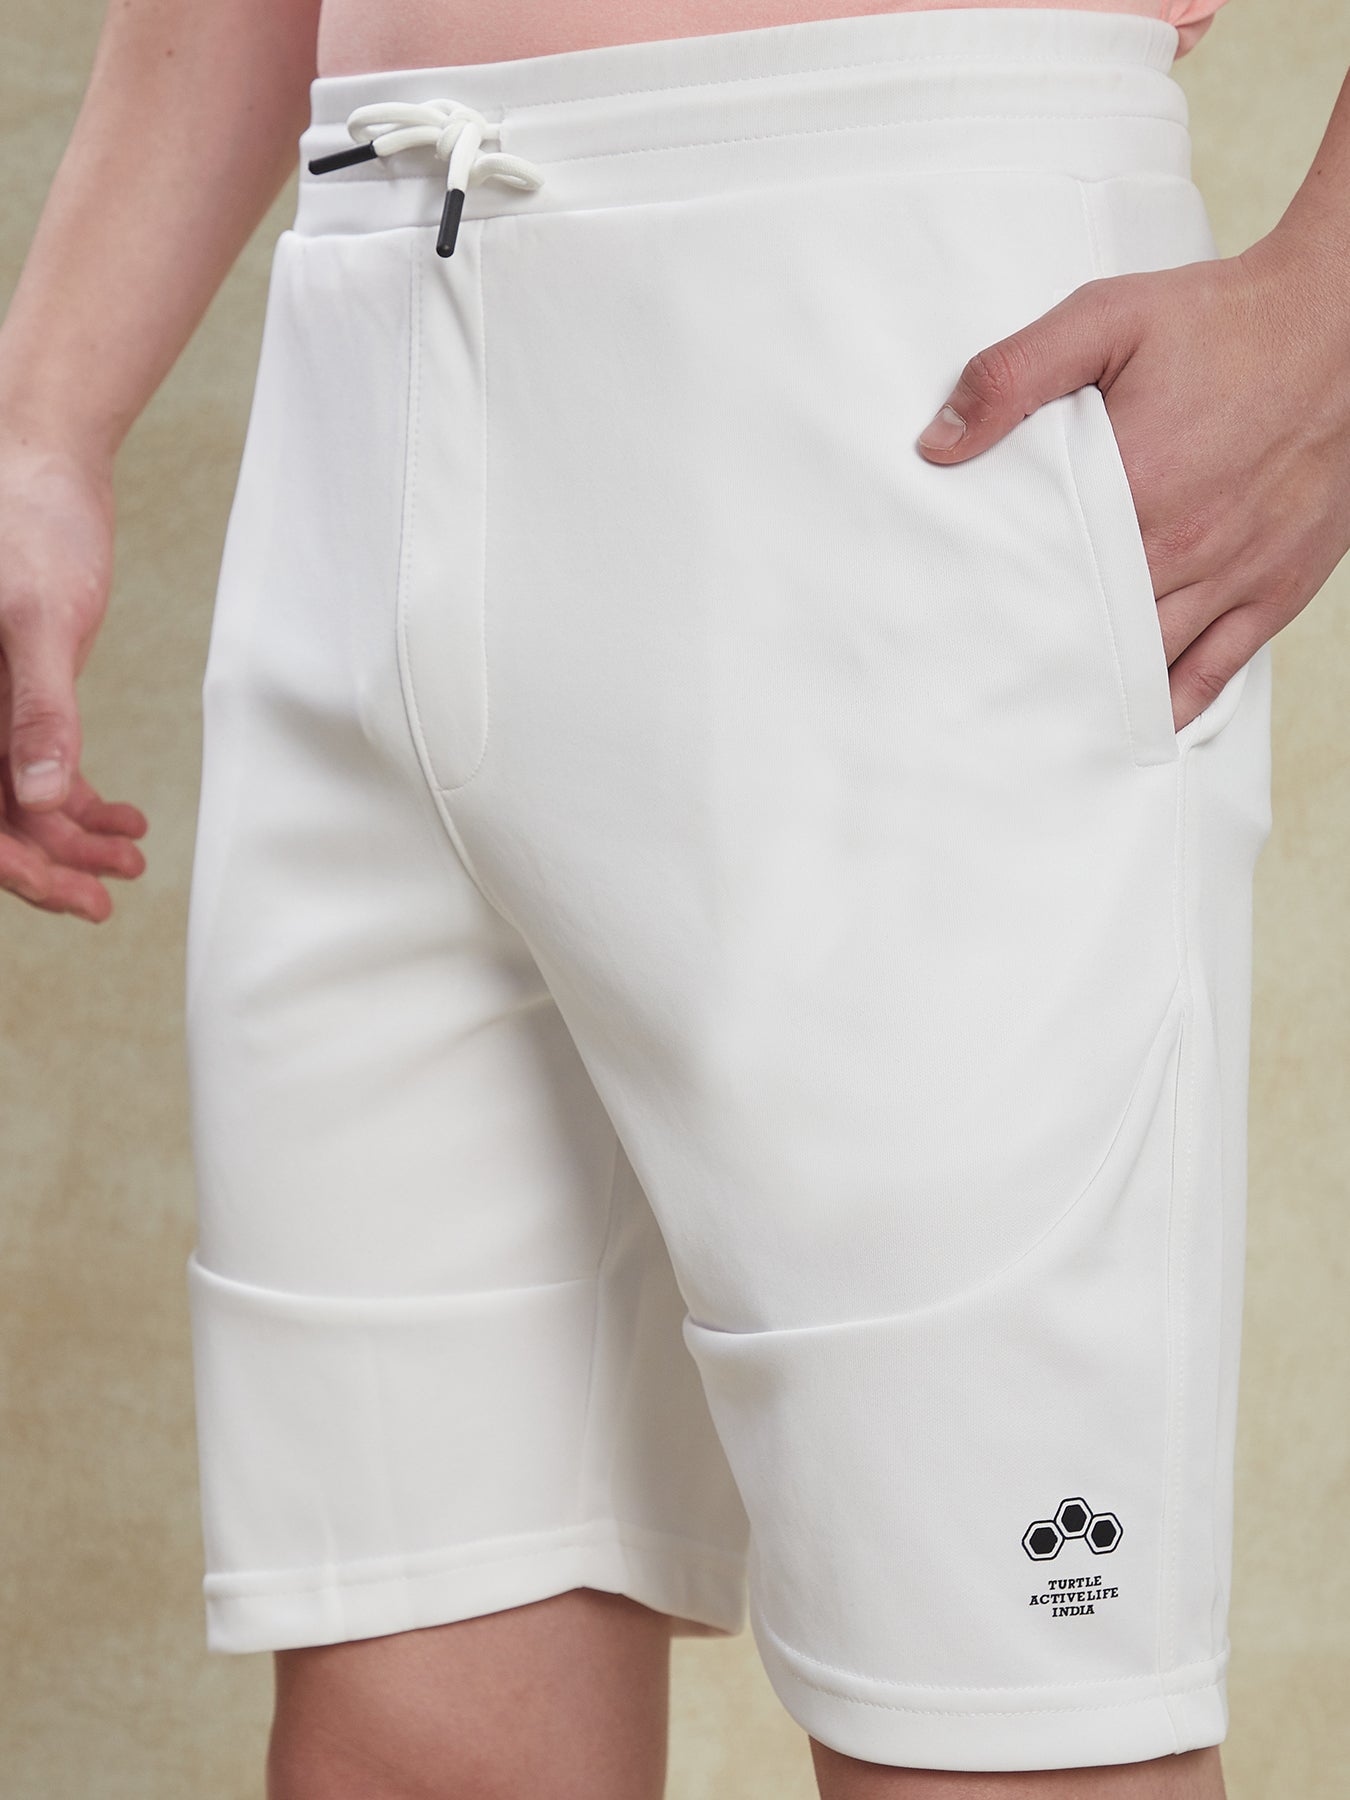 Knitted White Plain Shorts Active Shorts